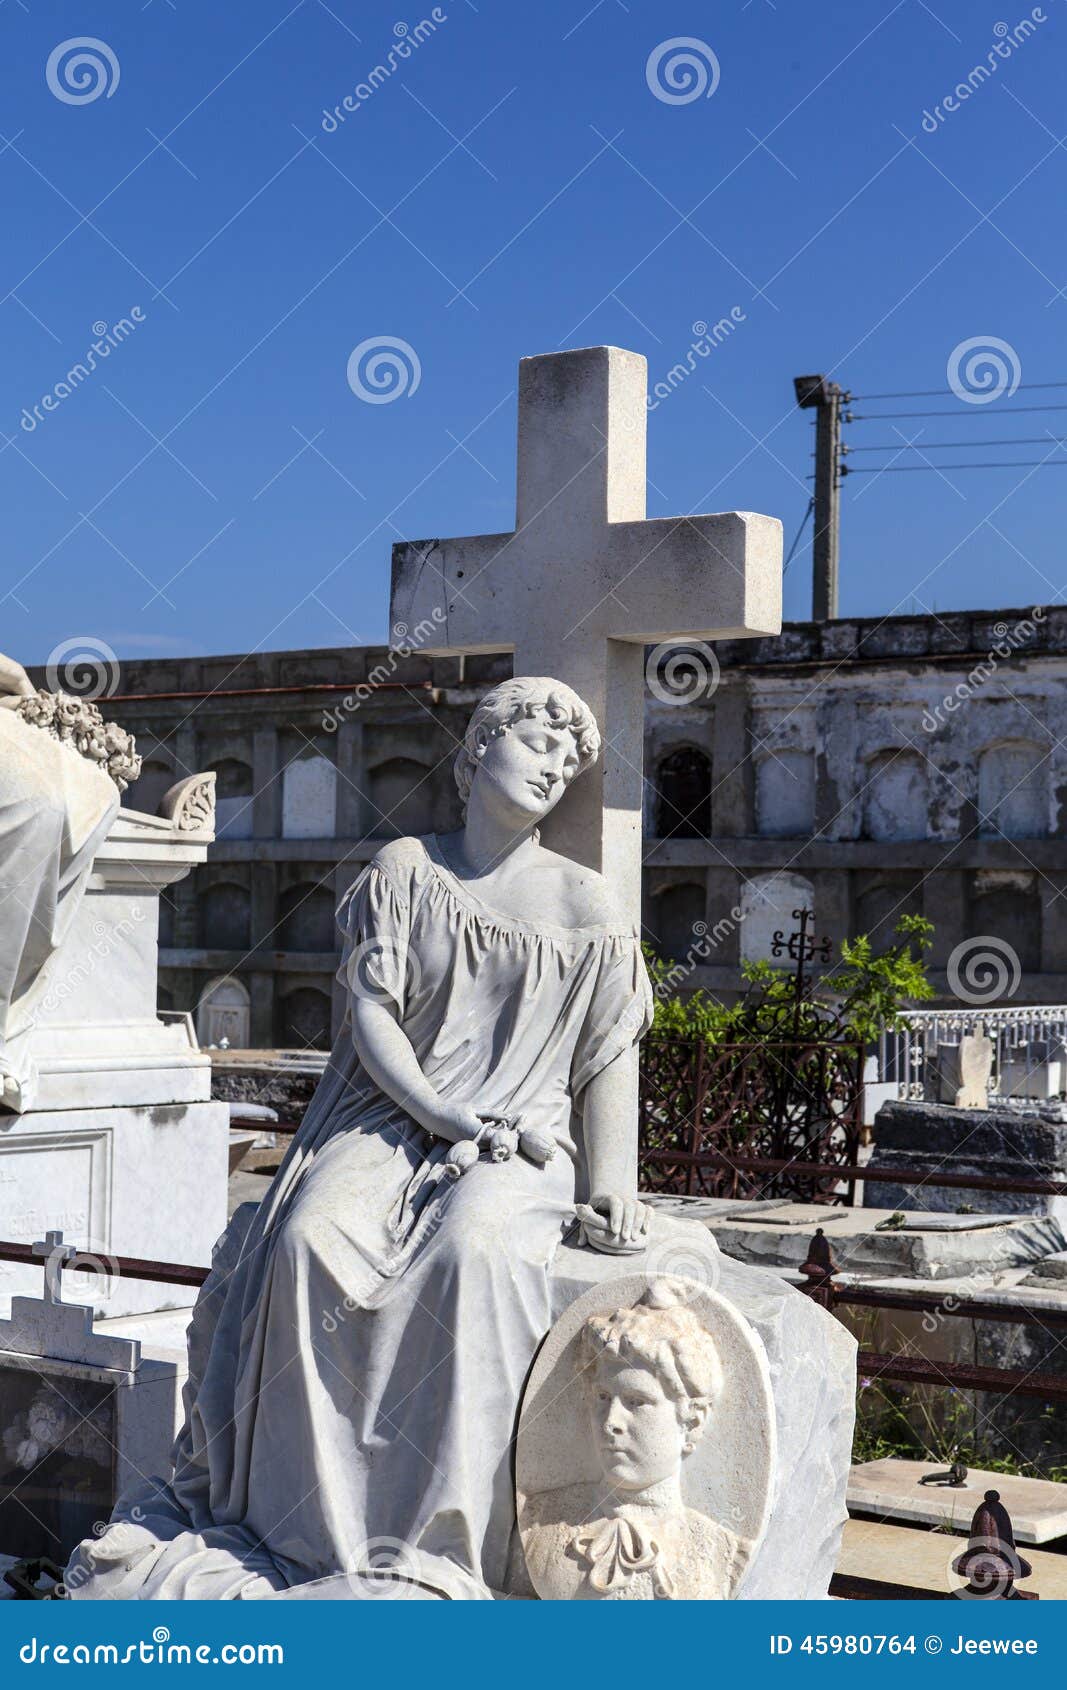 rich decorated grave at the roman catholic cementerio la reina cemetery in cienfuegos, cuba